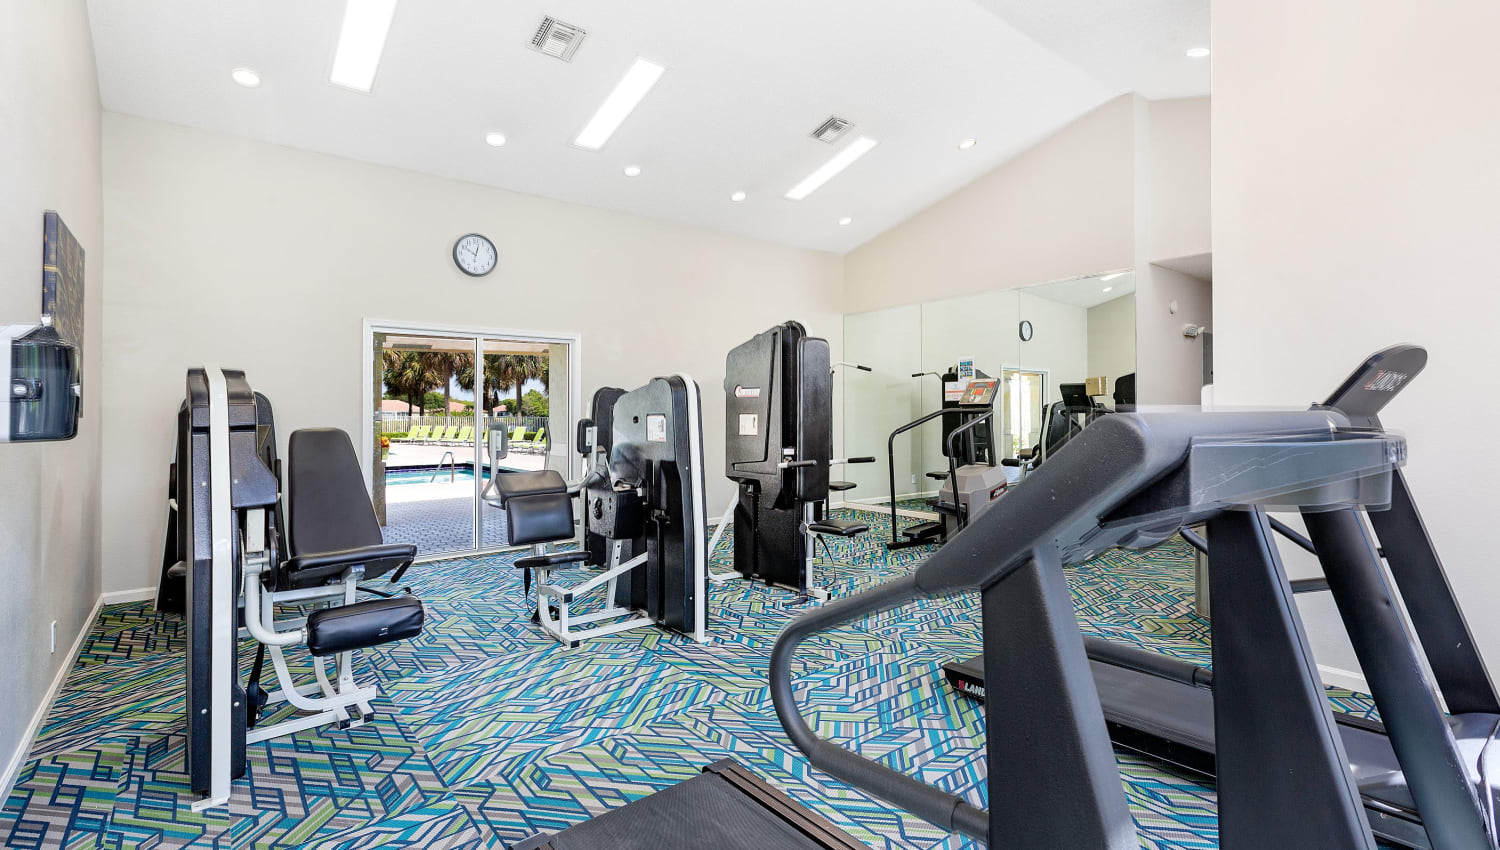 Gym area at Whalers Cove Apartments in Boynton Beach, Florida